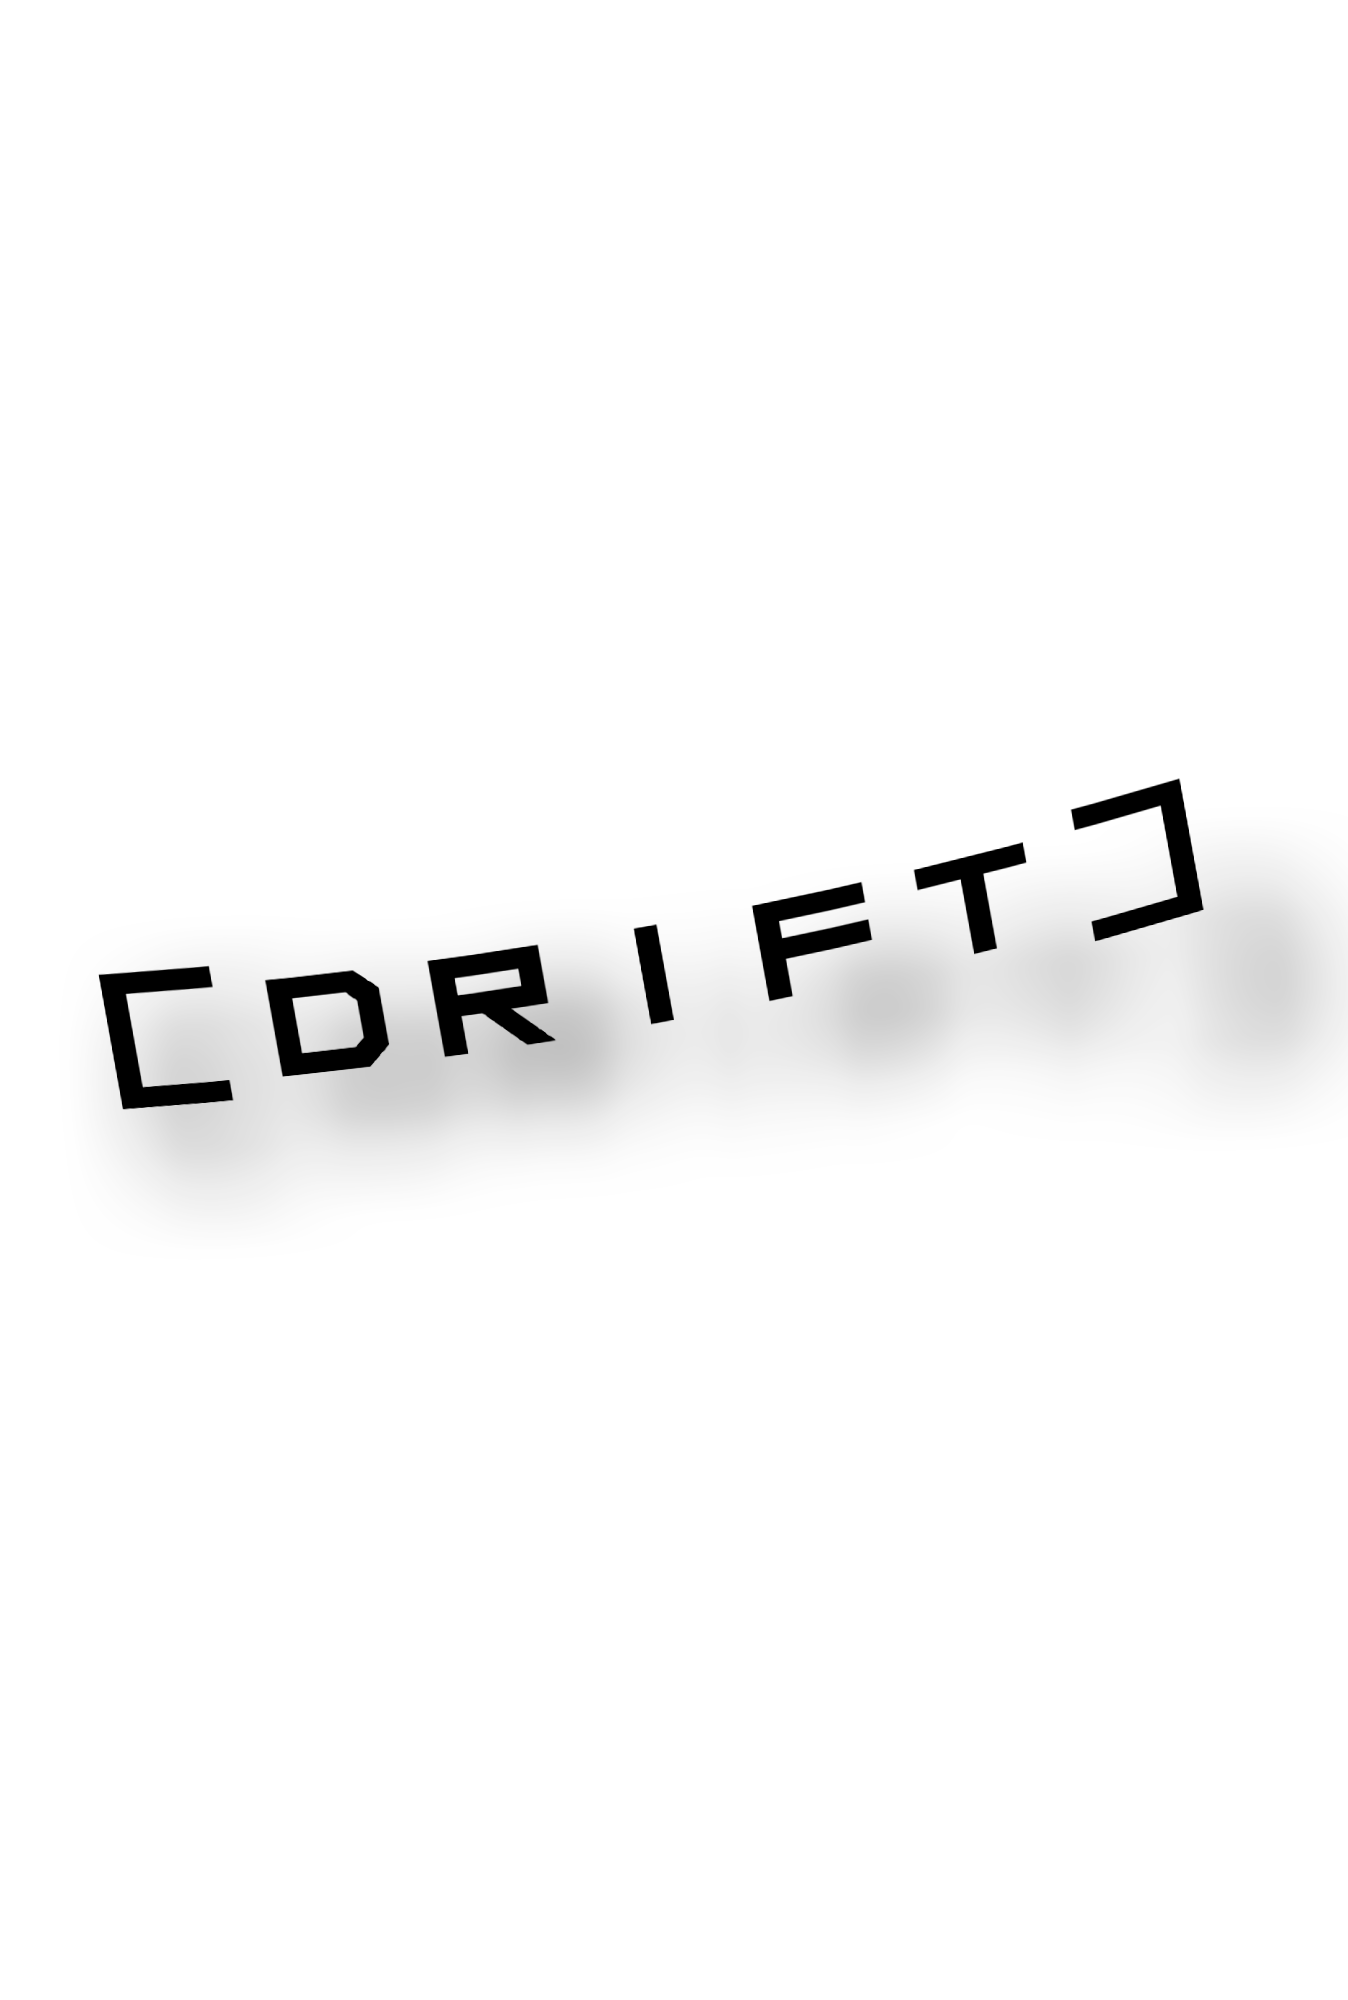 ''Drift'' - Plotted Vinyl Sticker